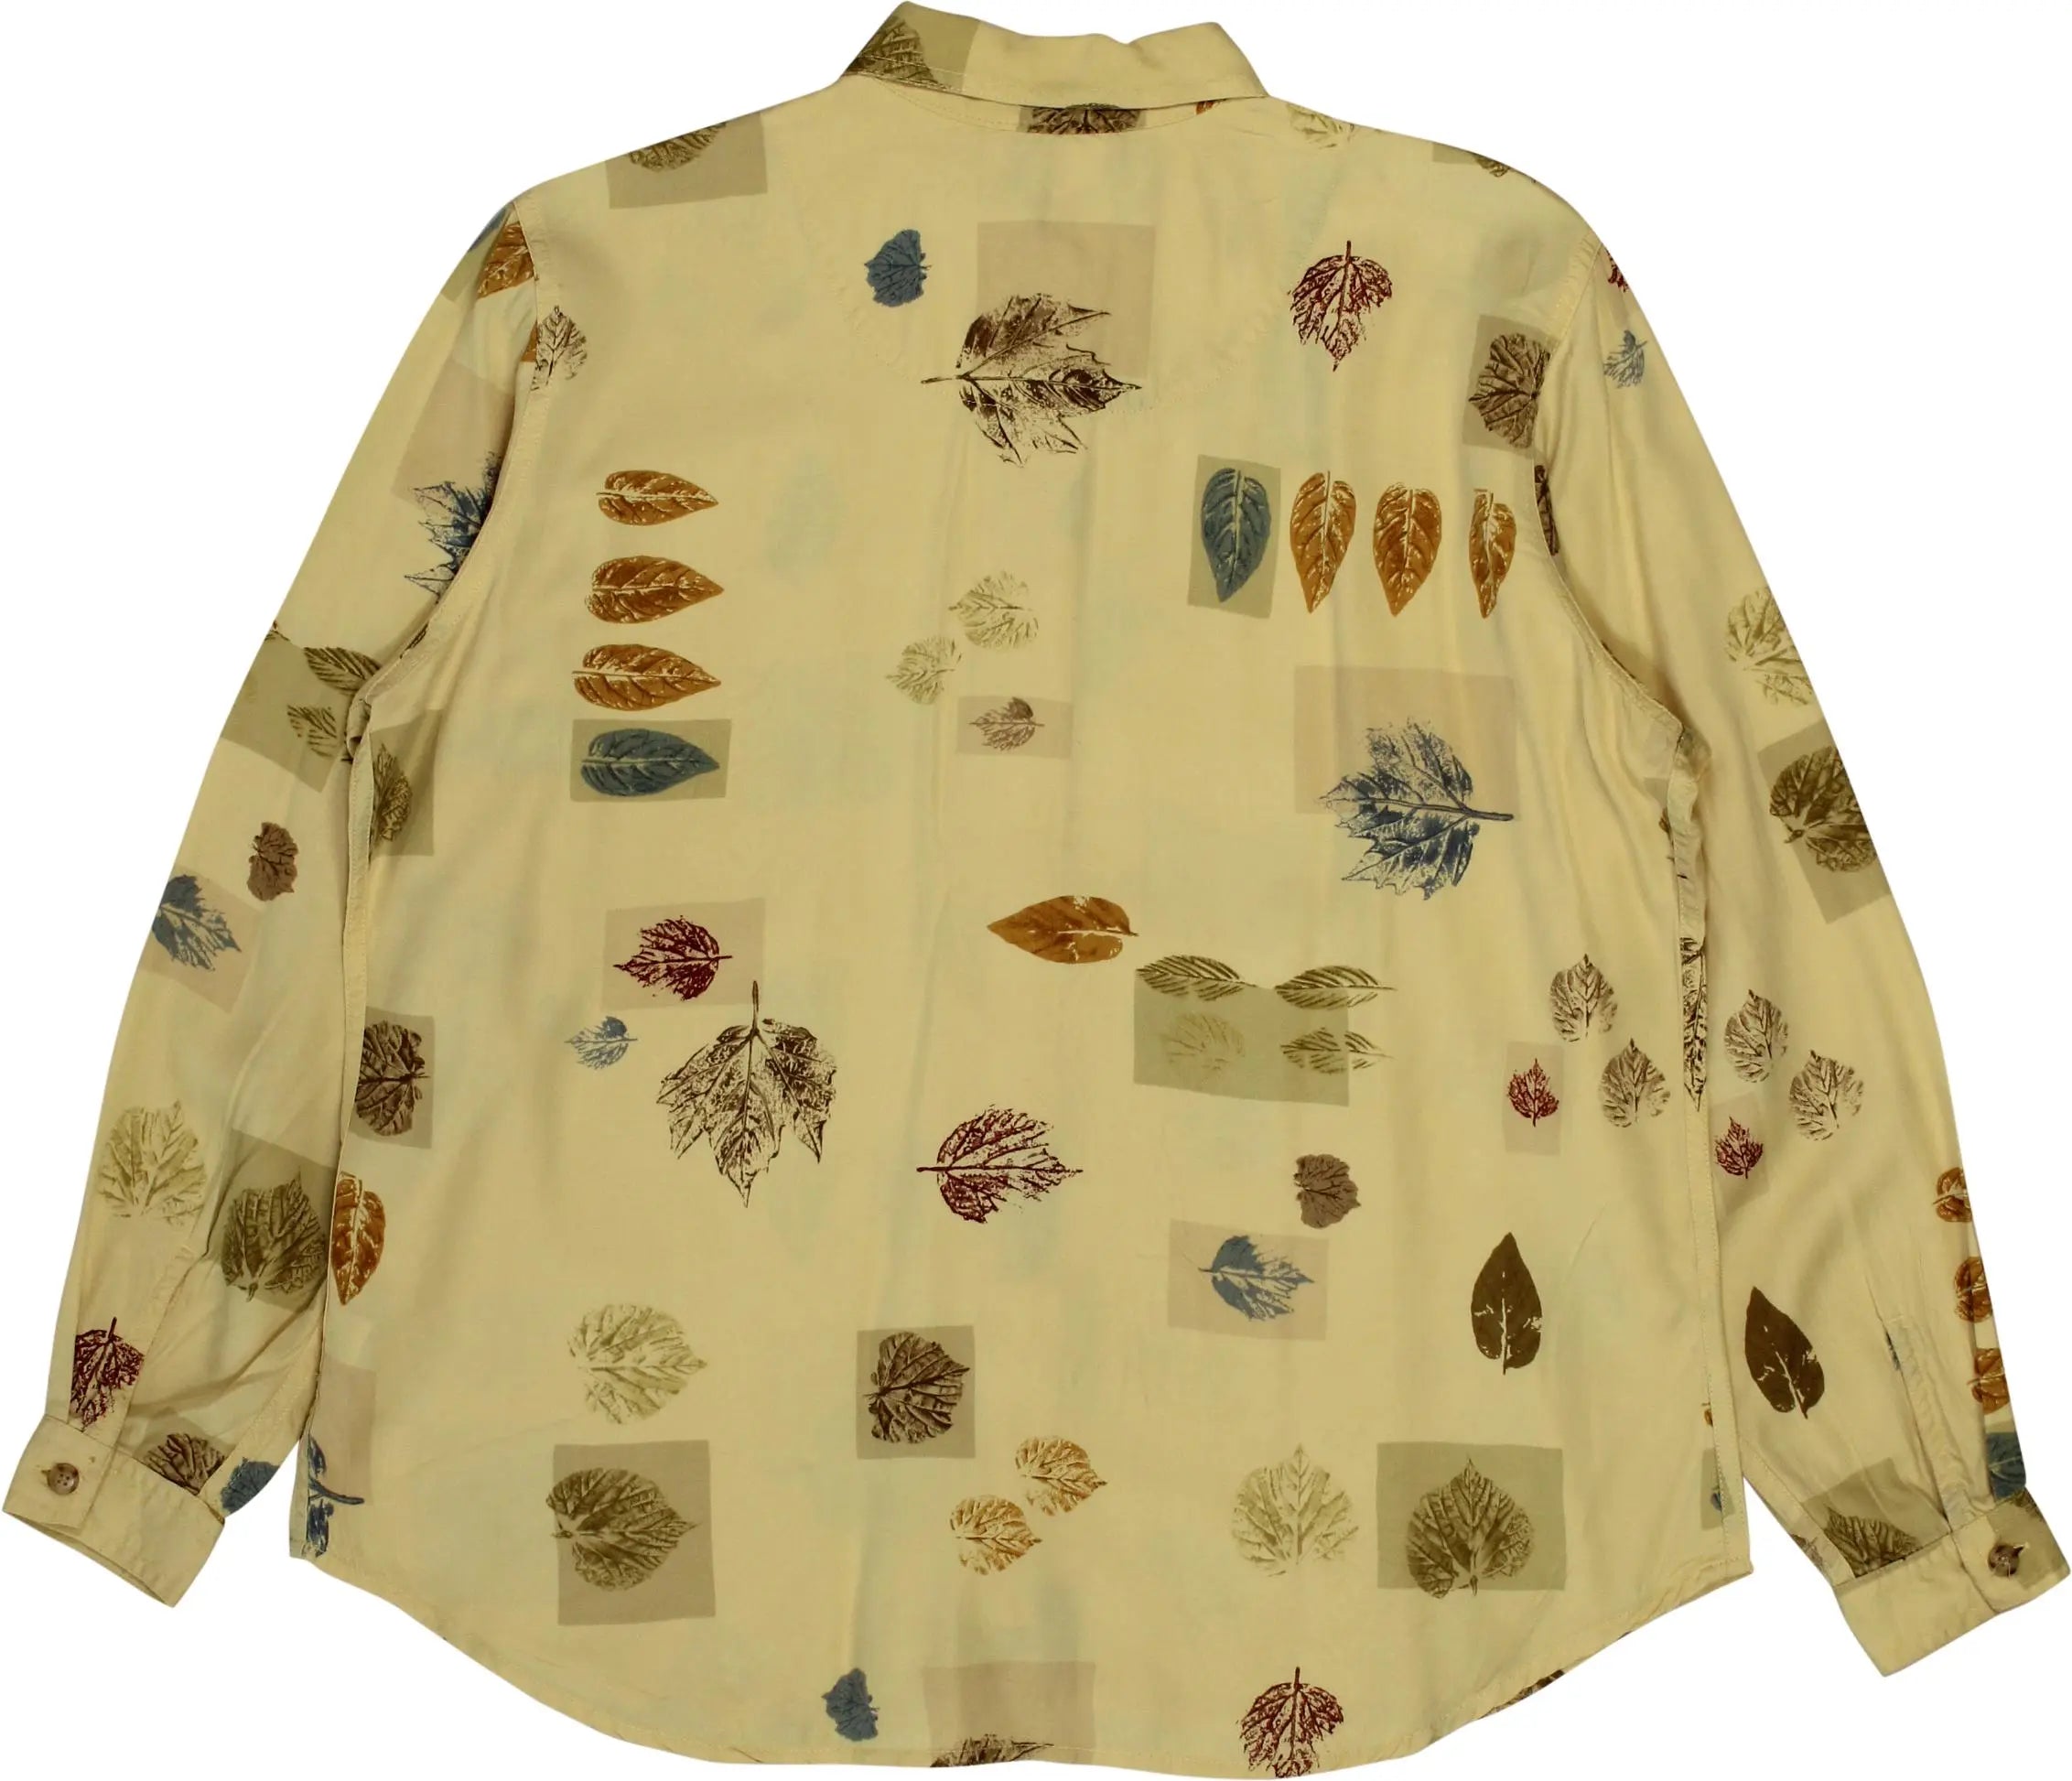 Liz Claiborne - 90s Patterned Blouse- ThriftTale.com - Vintage and second handclothing